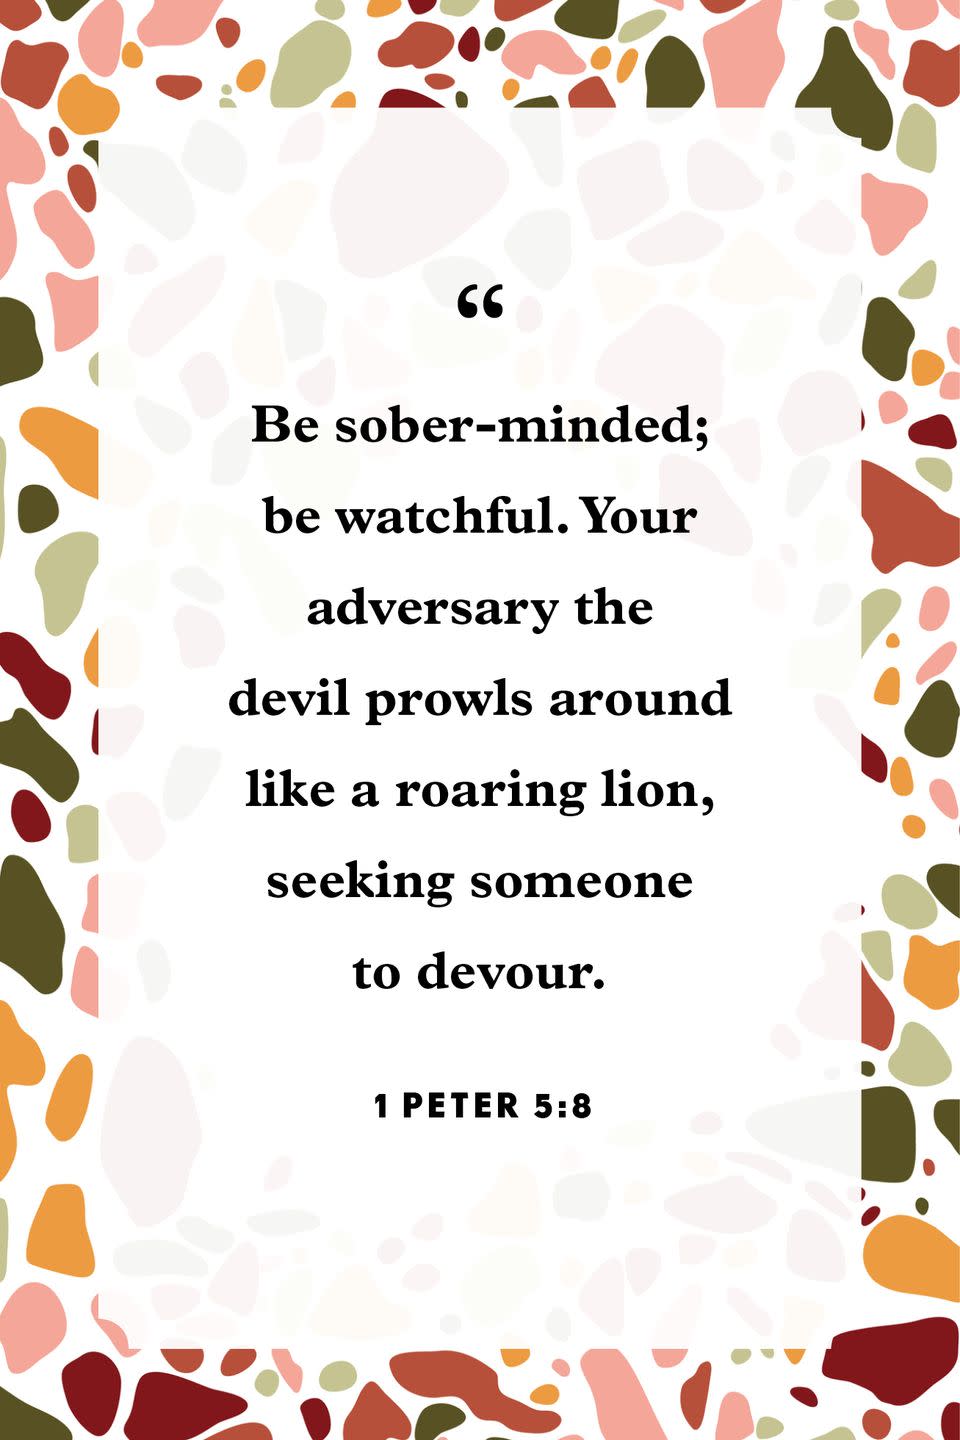 8) 1 Peter 5:8